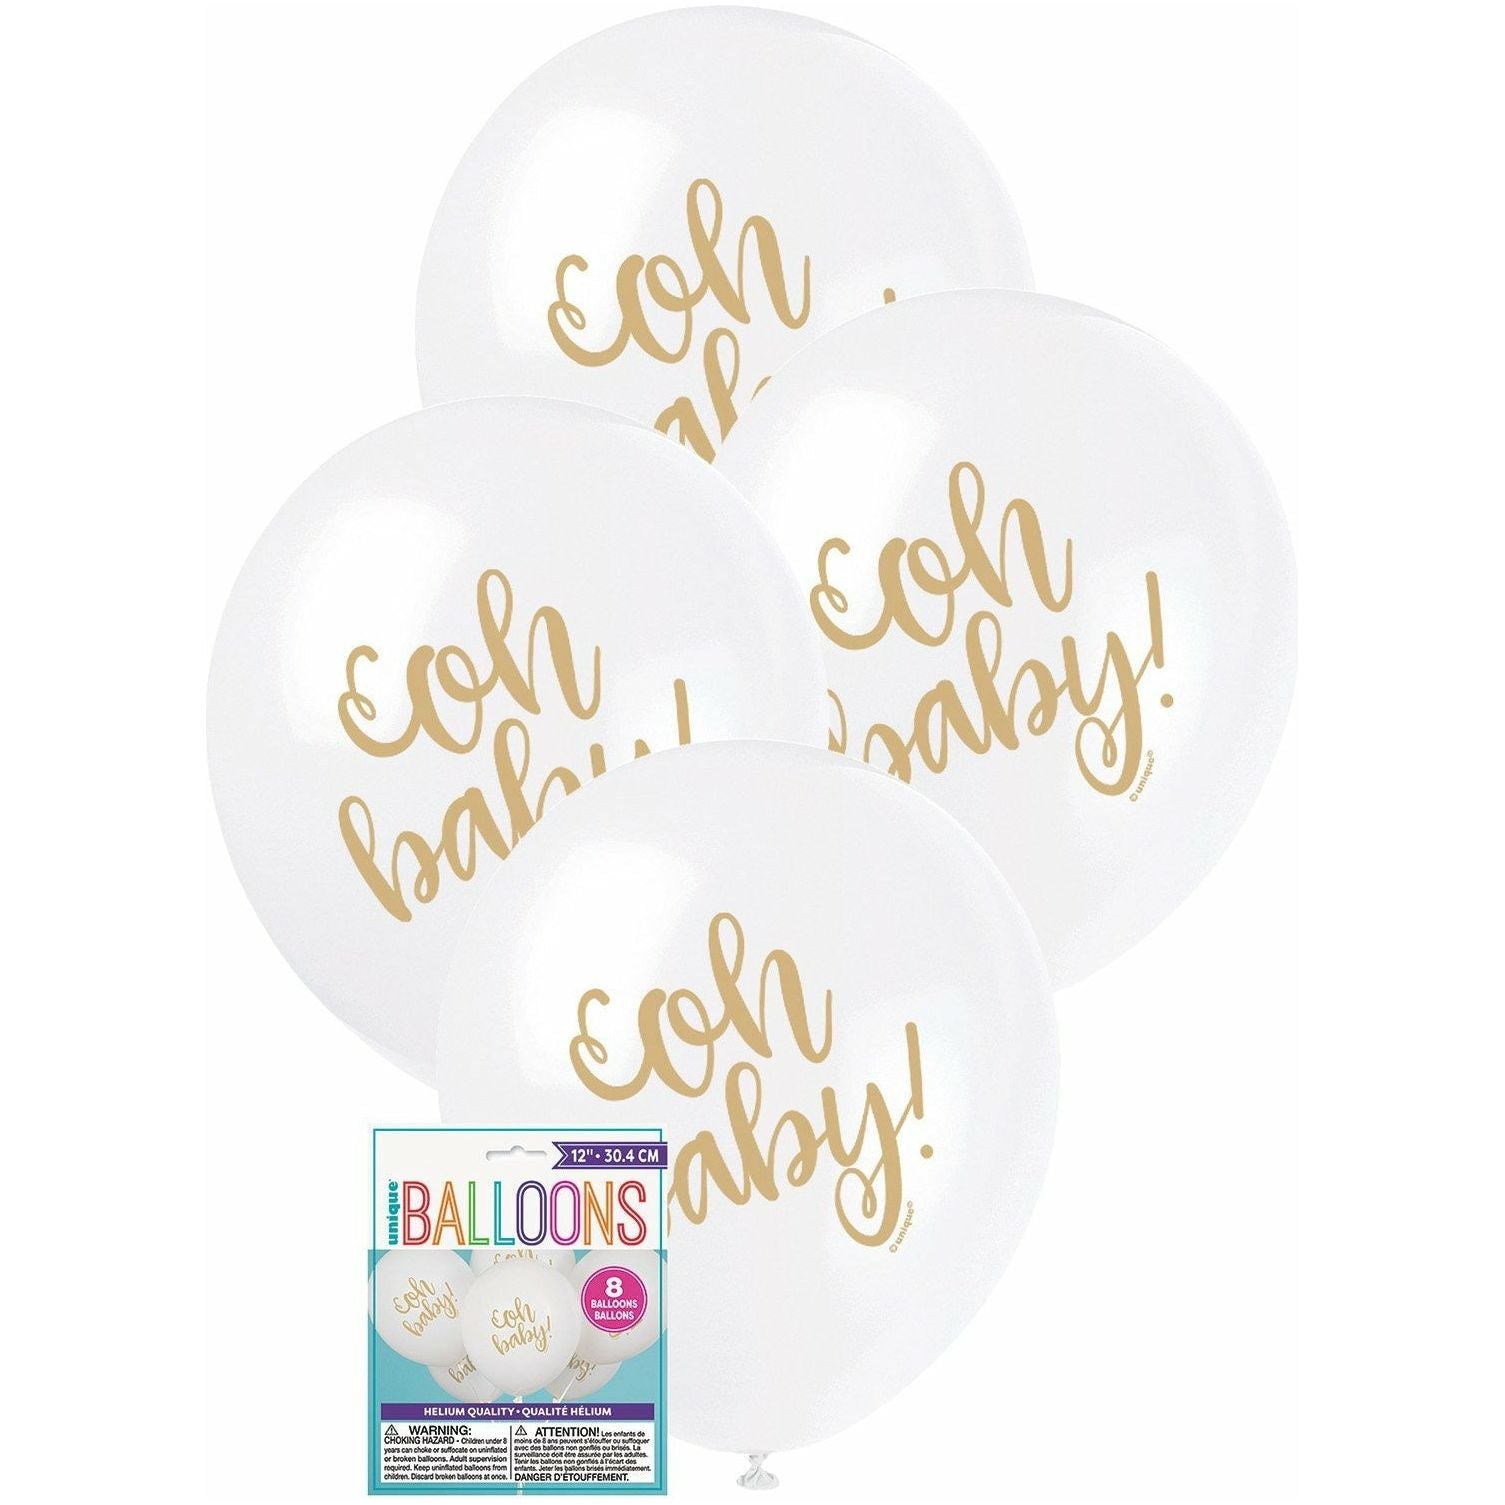 Oh Baby White Latex Balloons 30cm 8Pk - Dollars and Sense